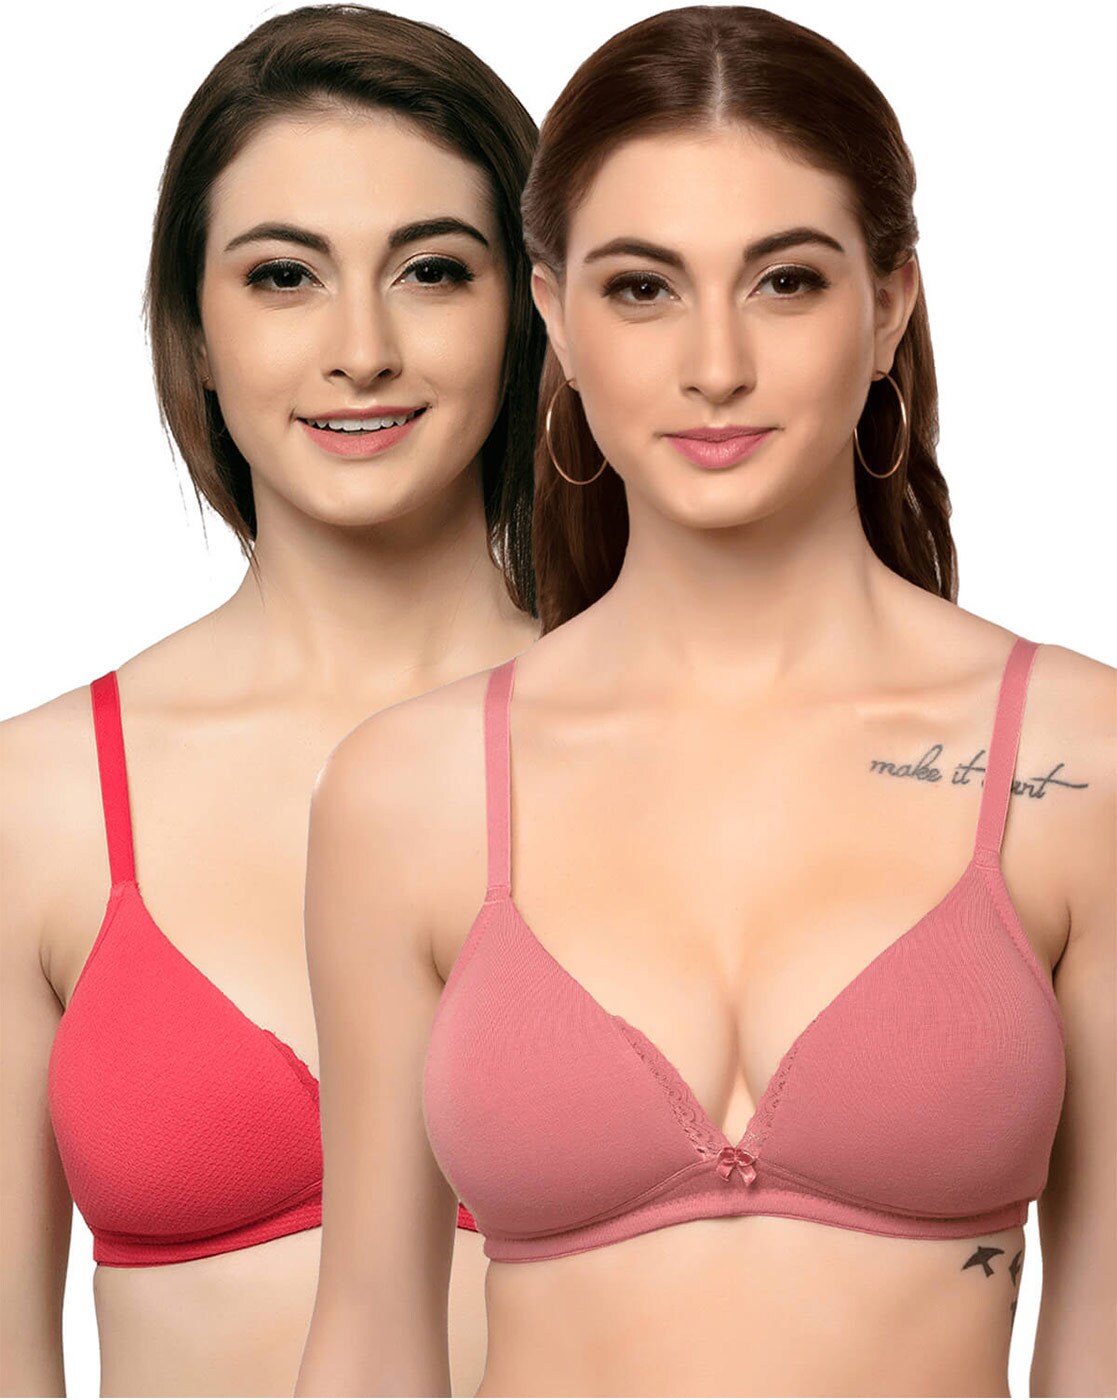 Buy Assorted Bras for Women by Innersense Online